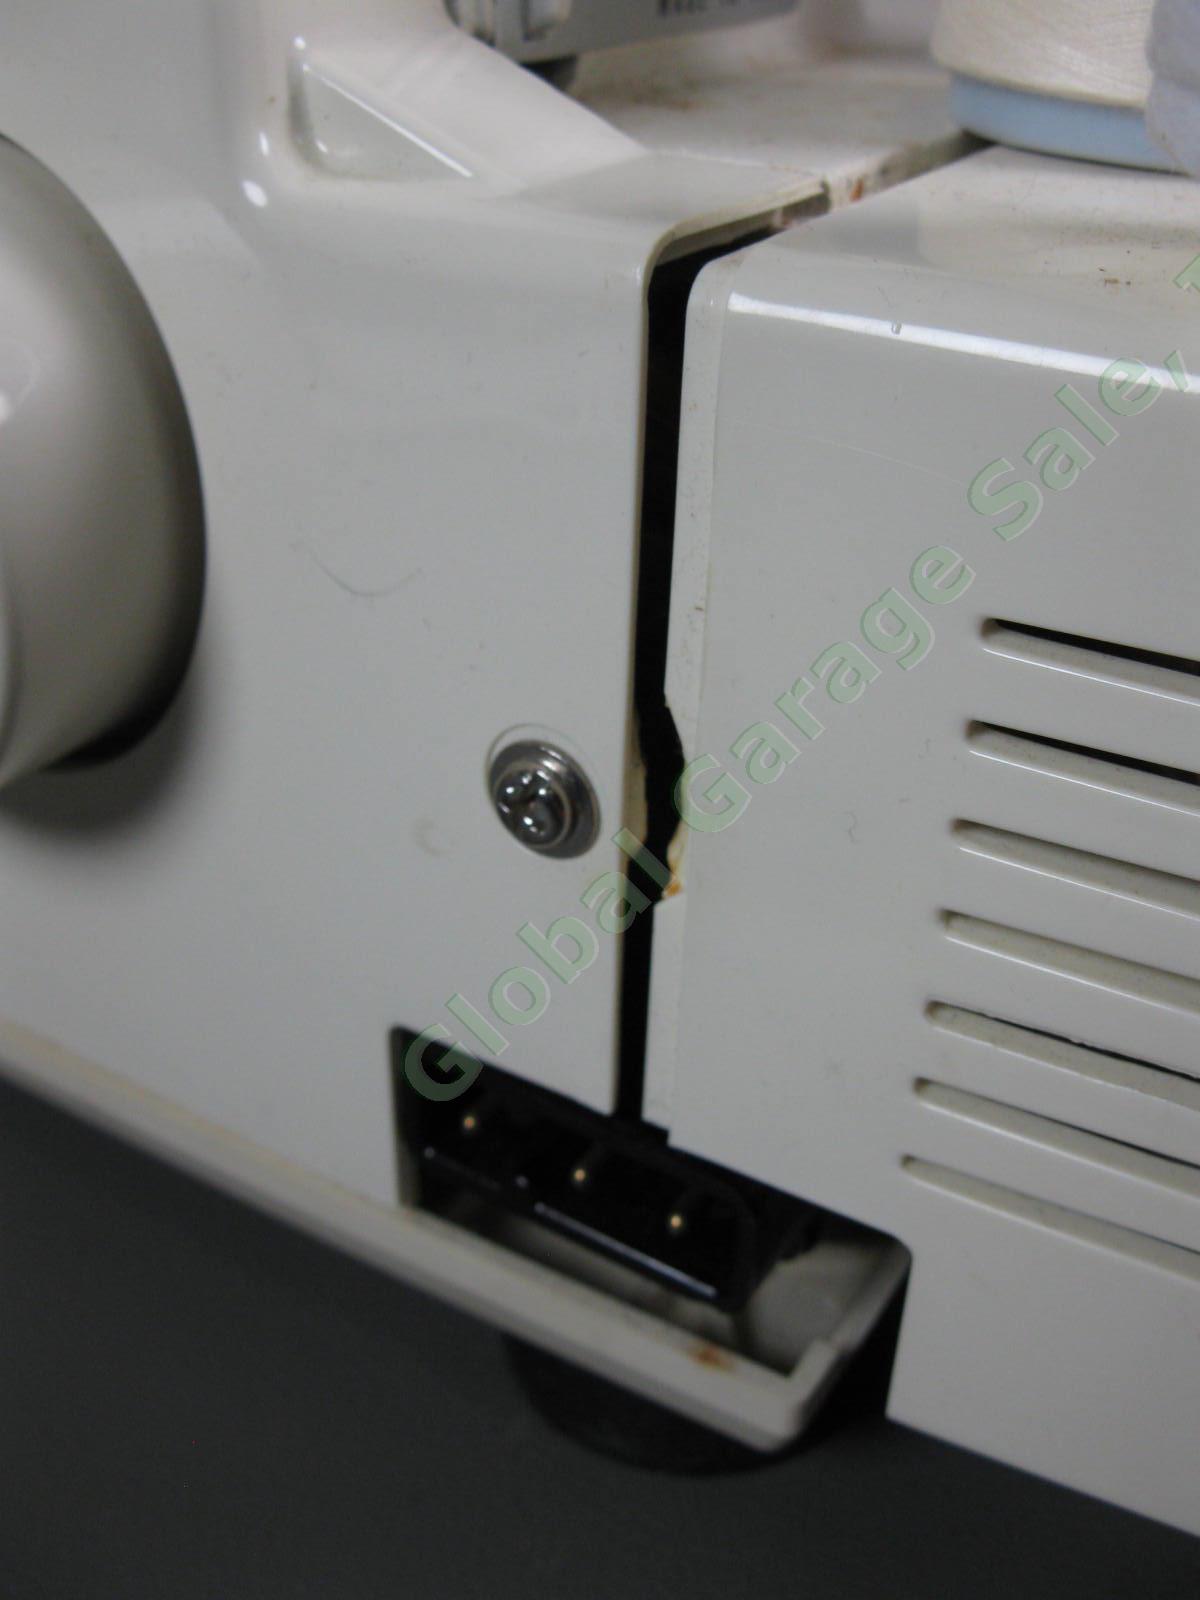 Singer Ultralock 14U32A Serger Sewing Machine Tested Runs Great Pedal Power Cord 6